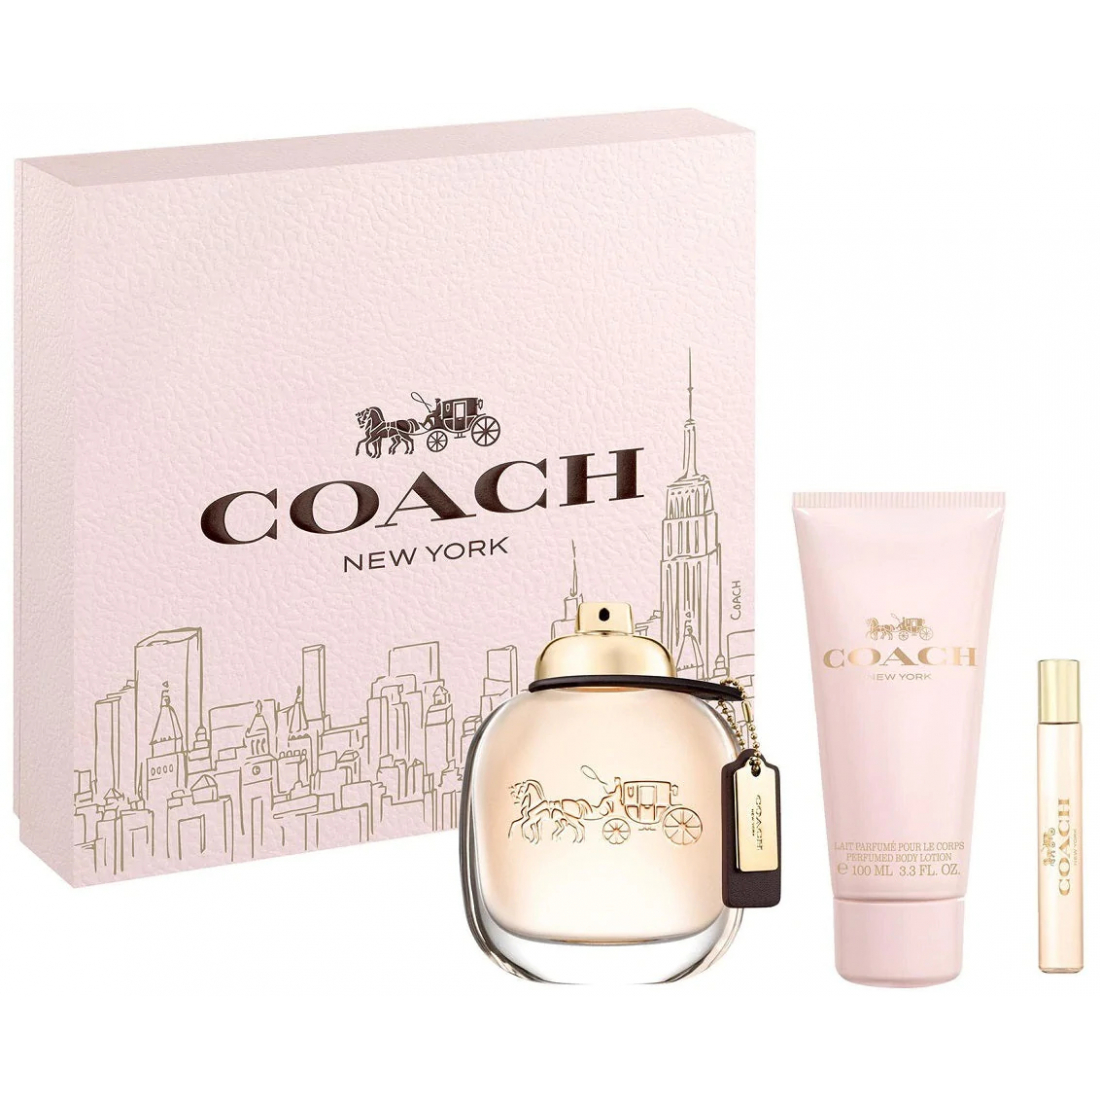 'Coach New York' Perfume Set - 3 Pieces